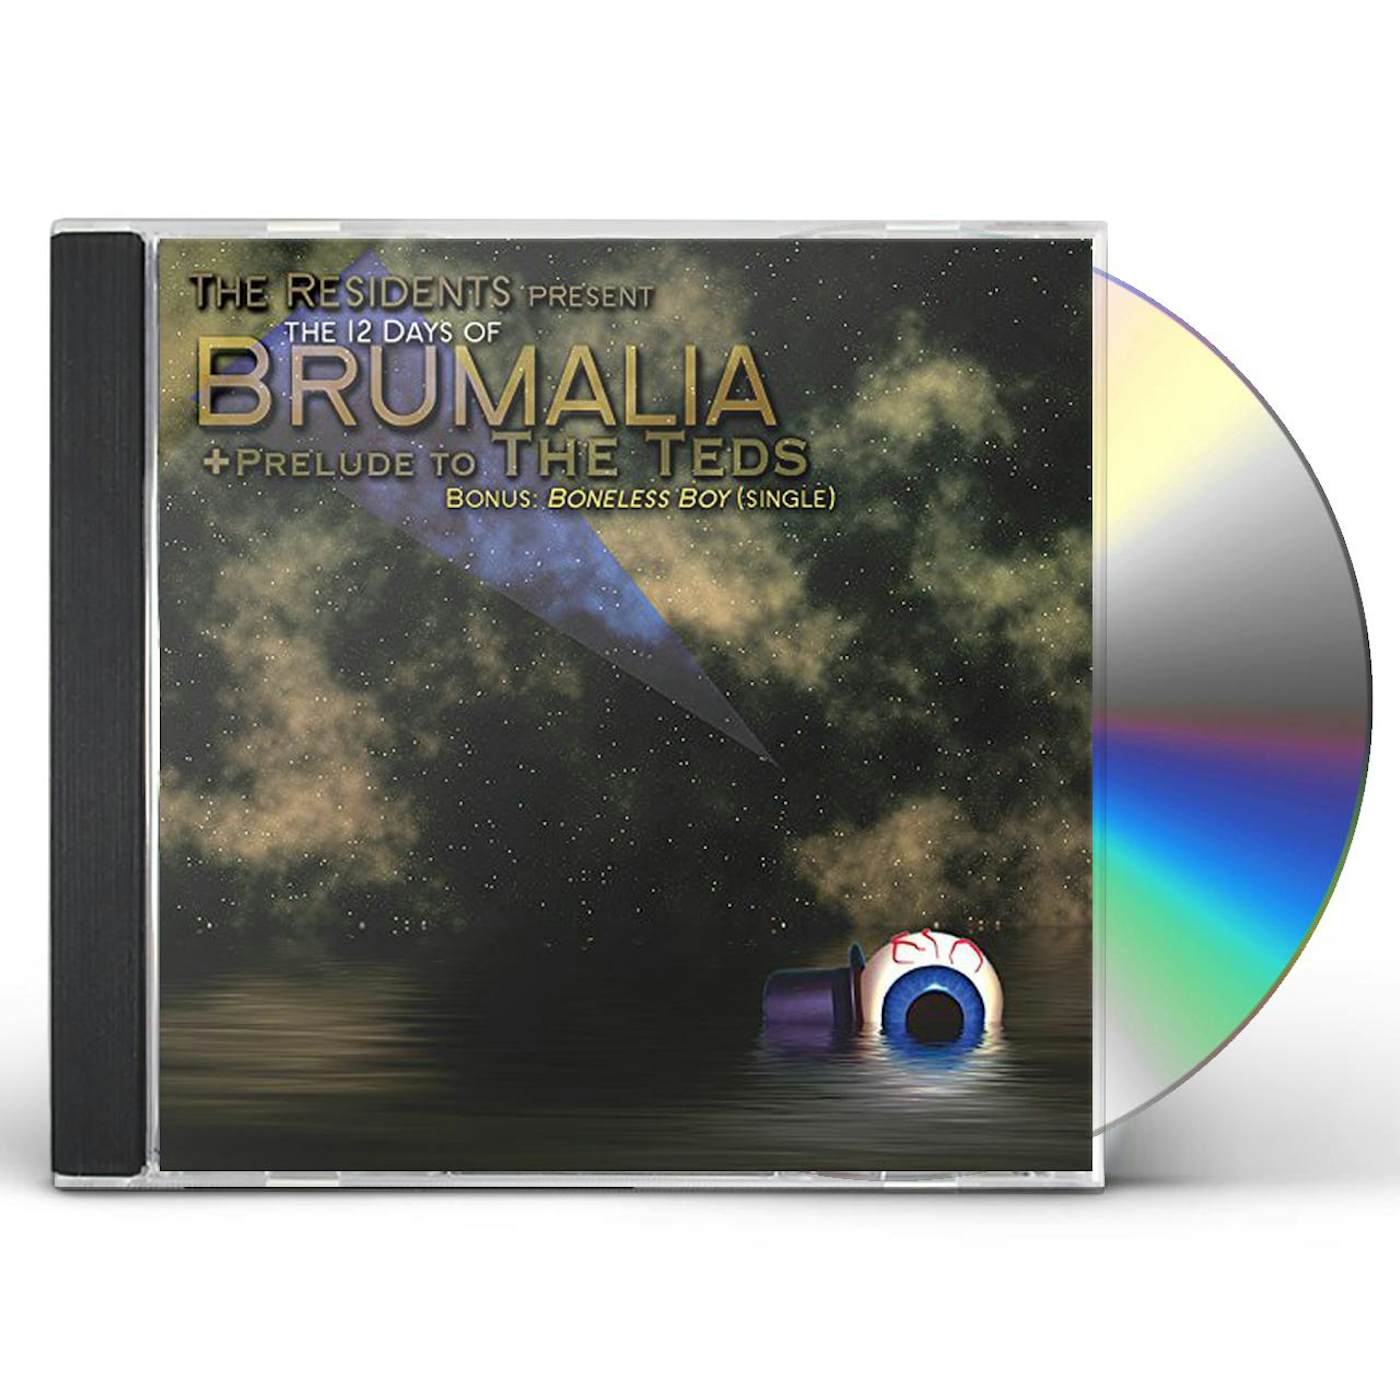 The Residents 12 DAYS OF BRUMALIA CD